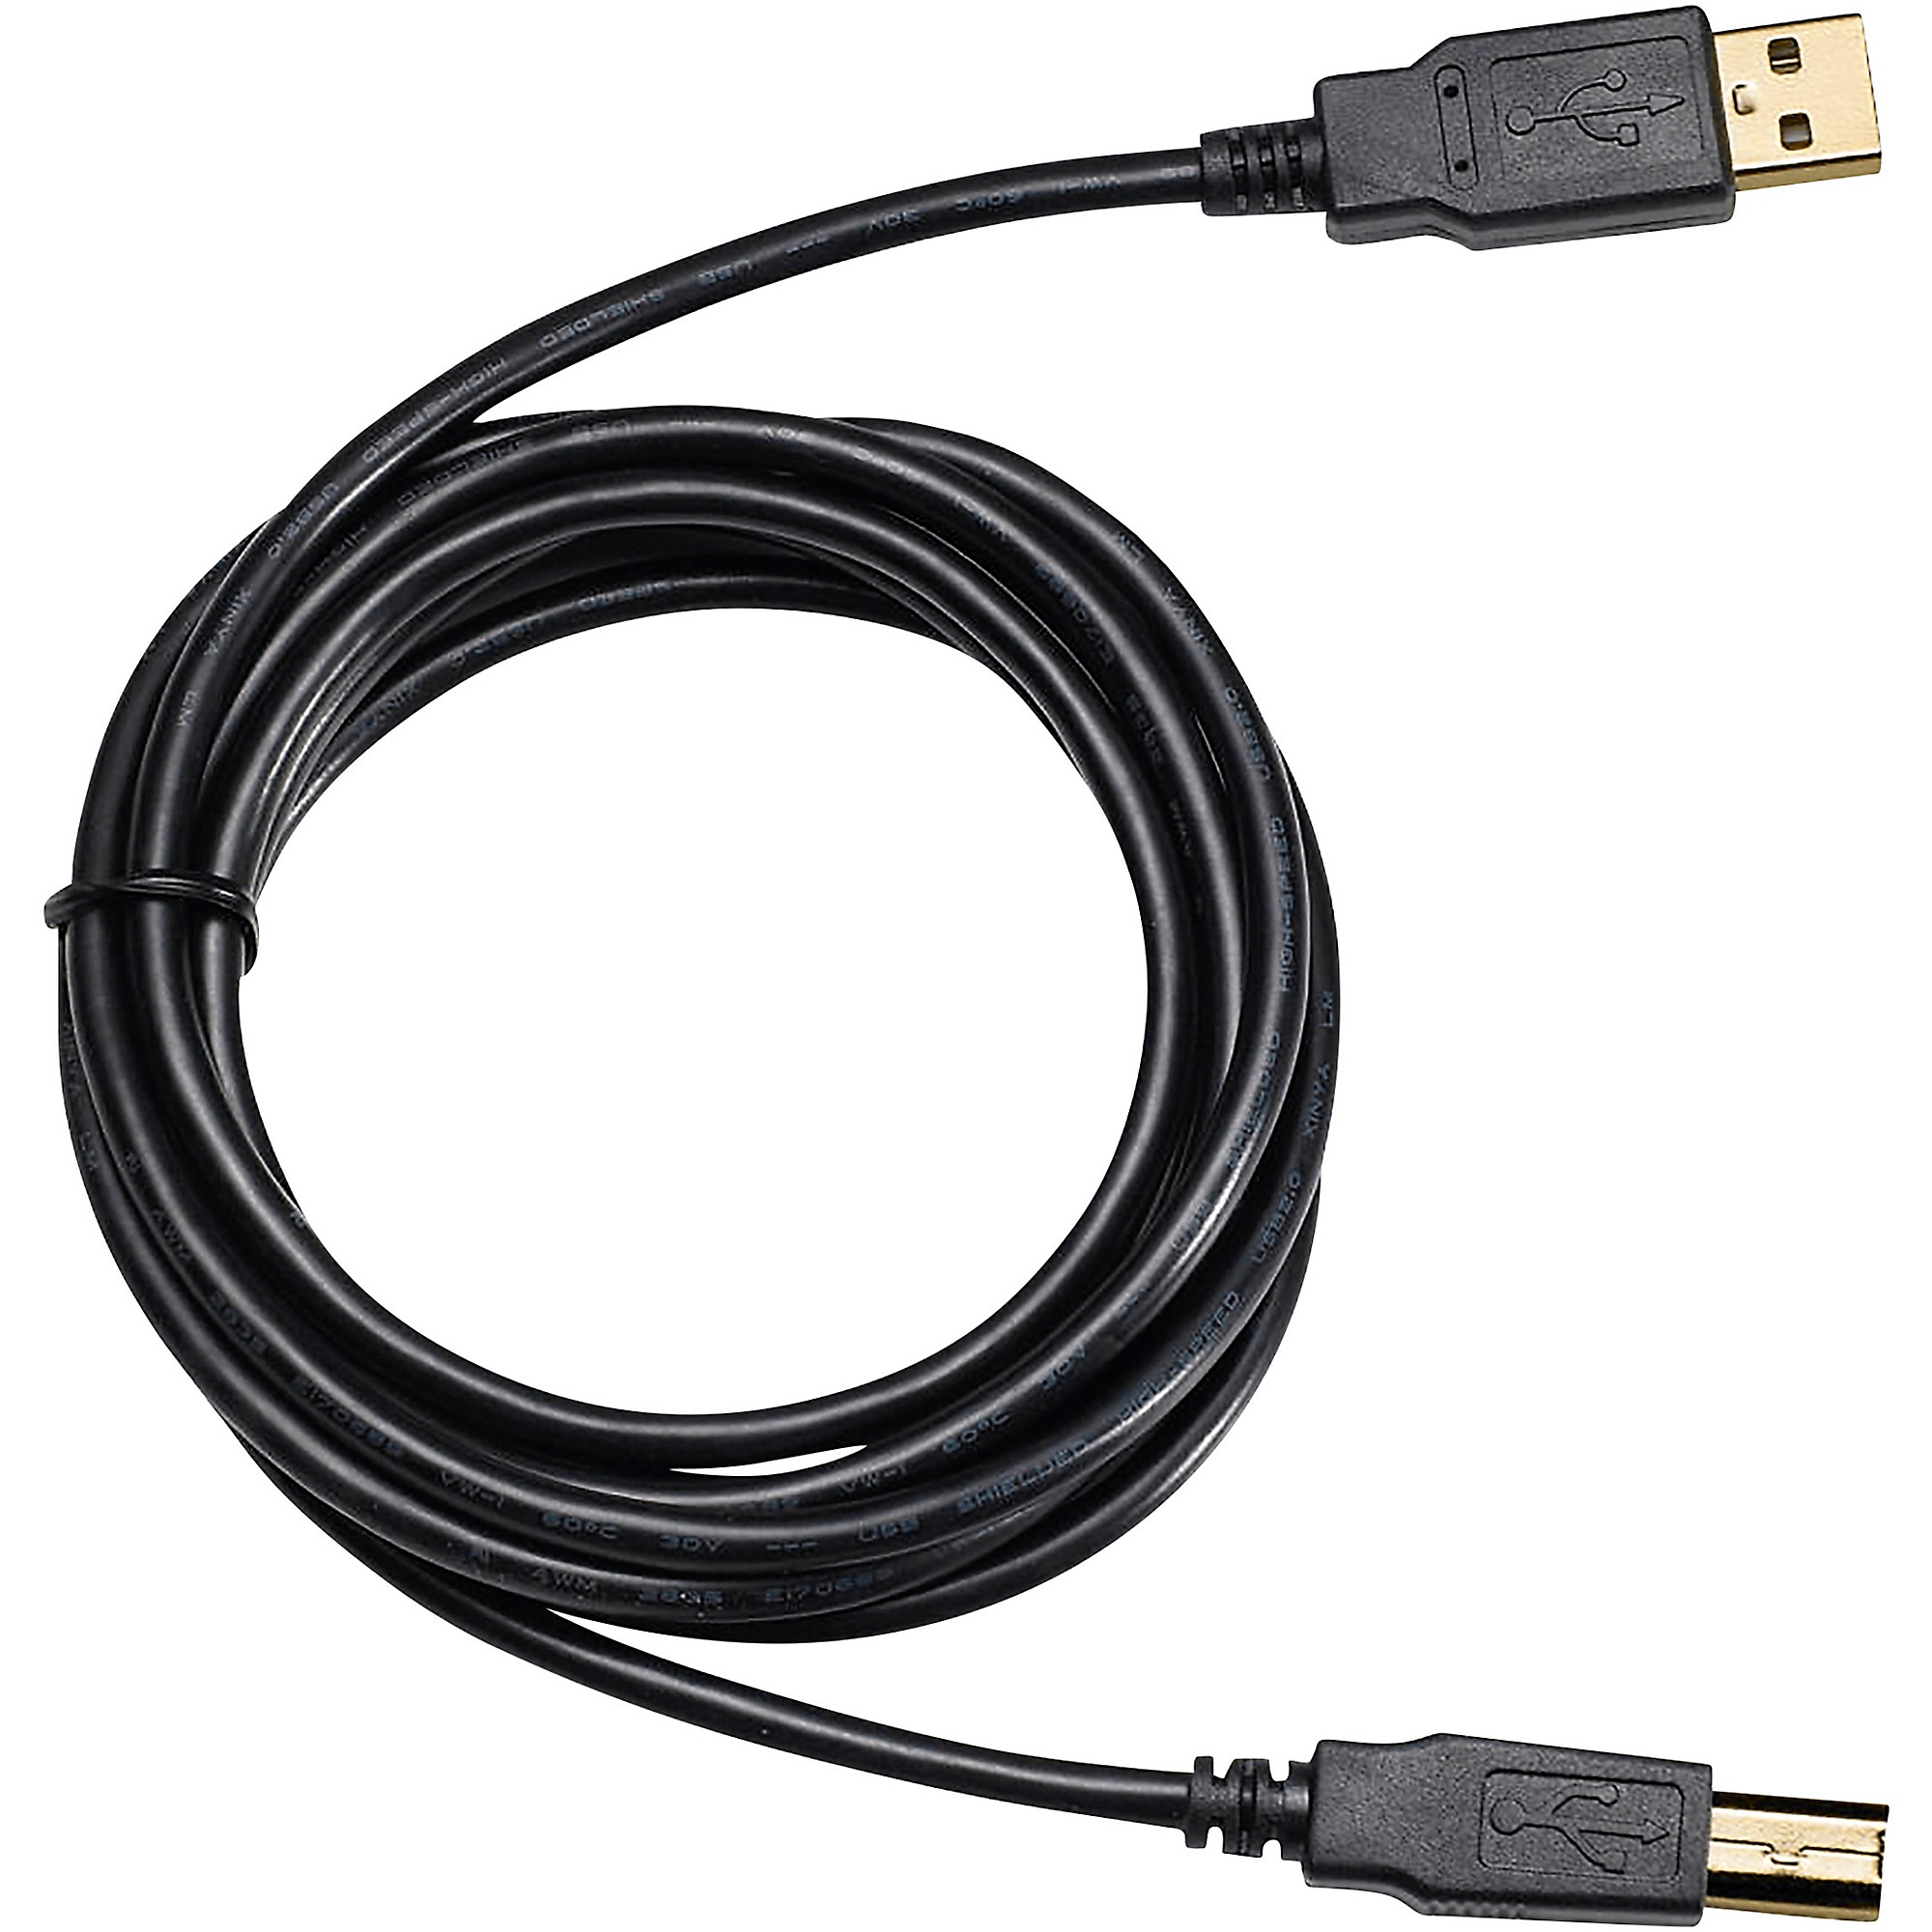 Audio-Technica AT-LP120XBT-USB - Giradiscos estéreo USB y